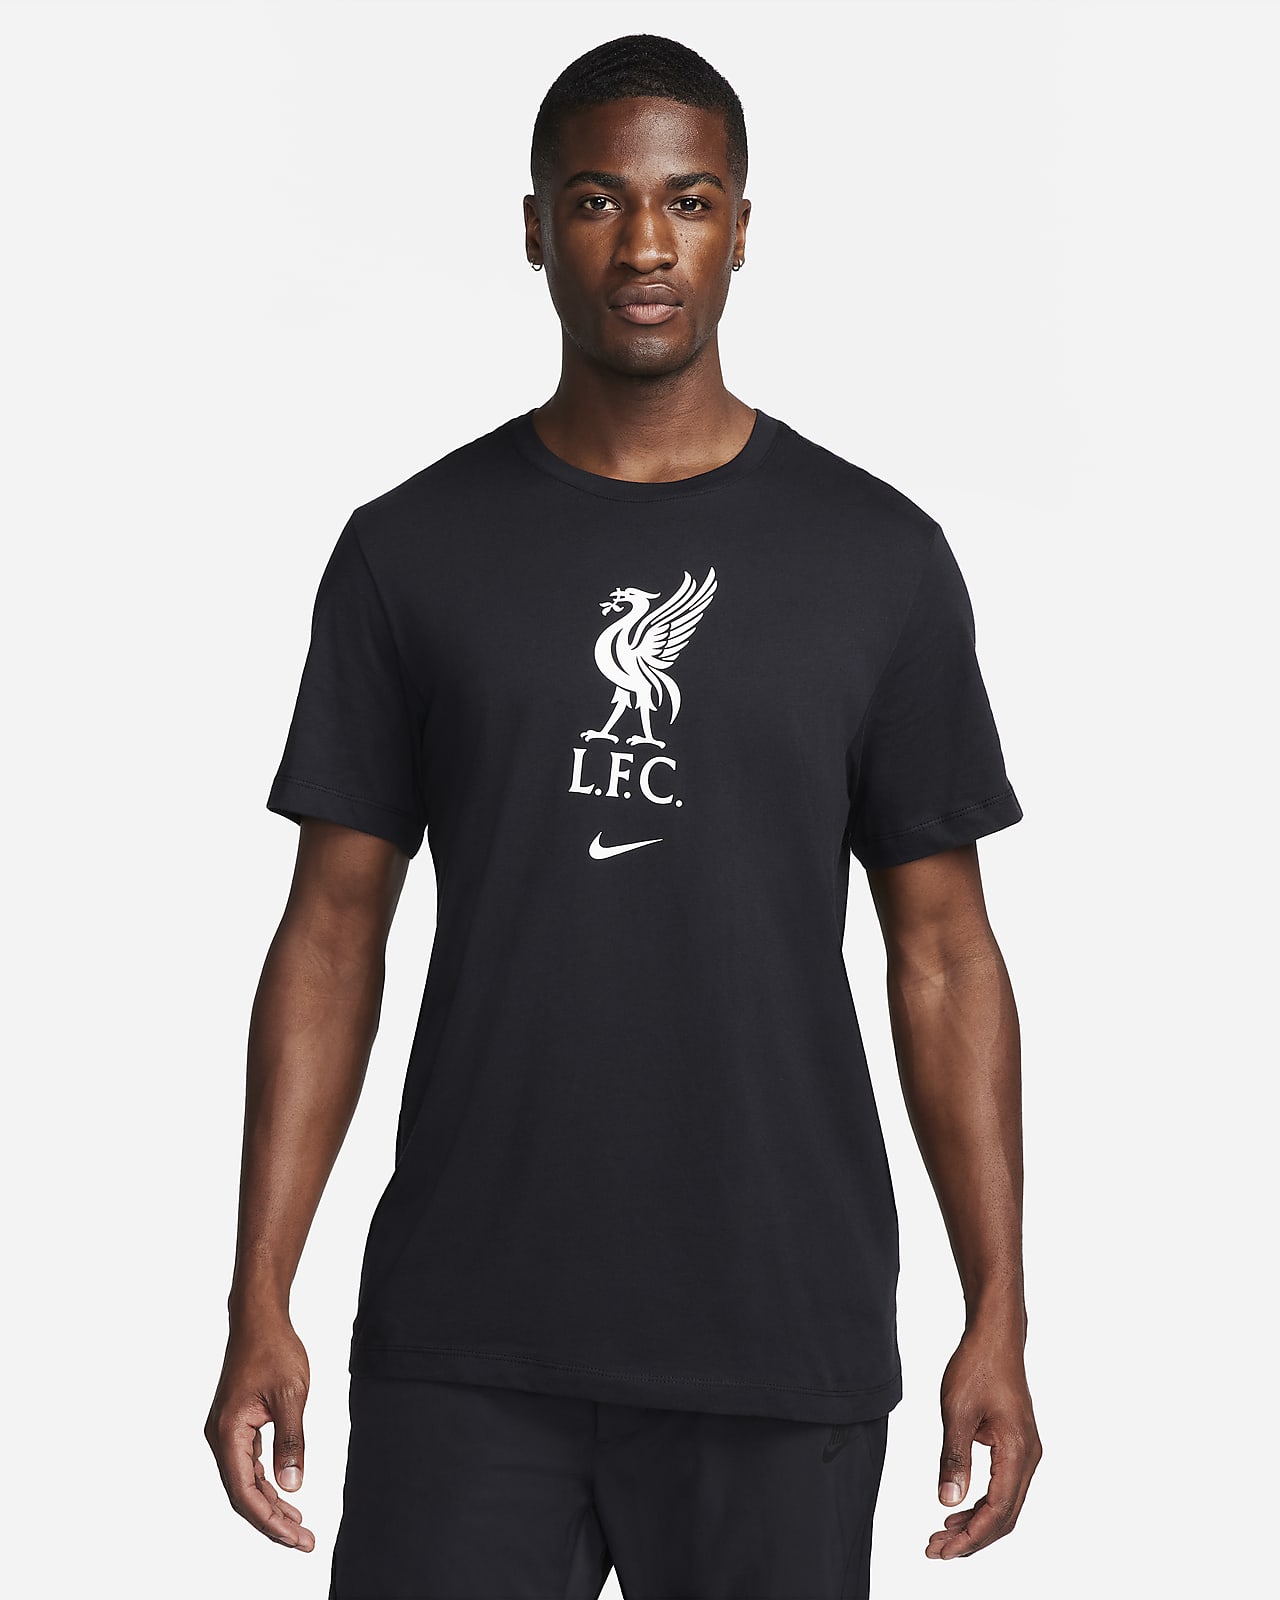 Liverpool FC 男款足球 T 恤